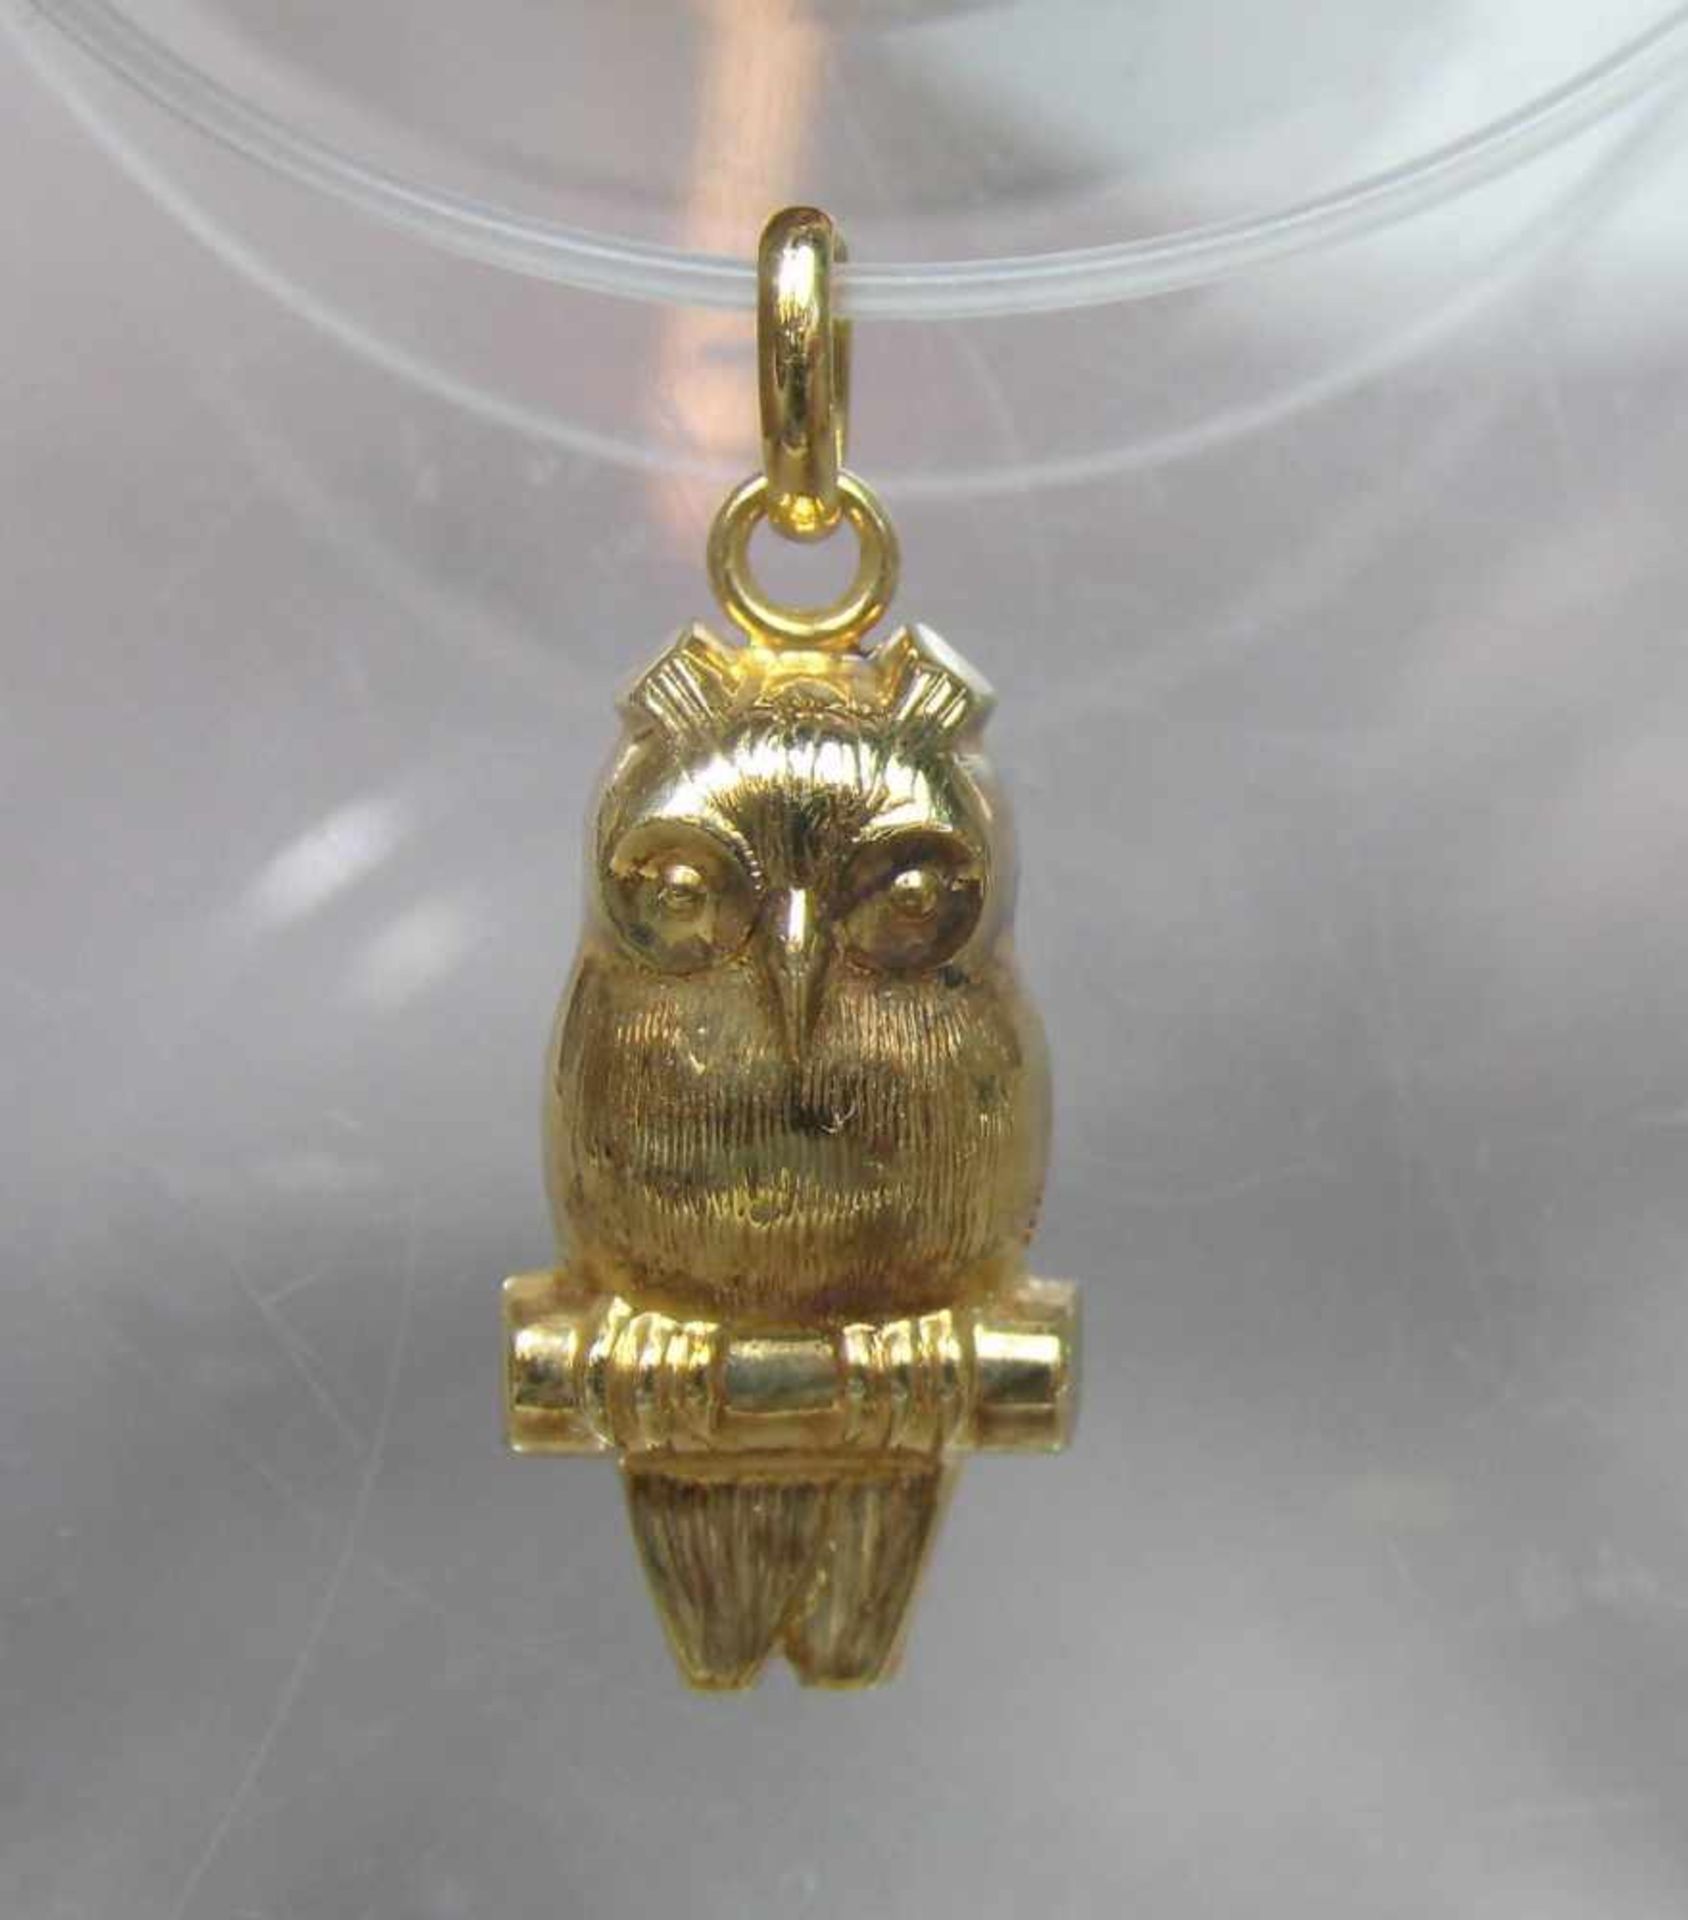 FIGÜRLICHER ANHÄNGER EULE / golden owl pendant, 20. Jh., 585er Gelbgold-Anhänger (1,8 g), gemarkt